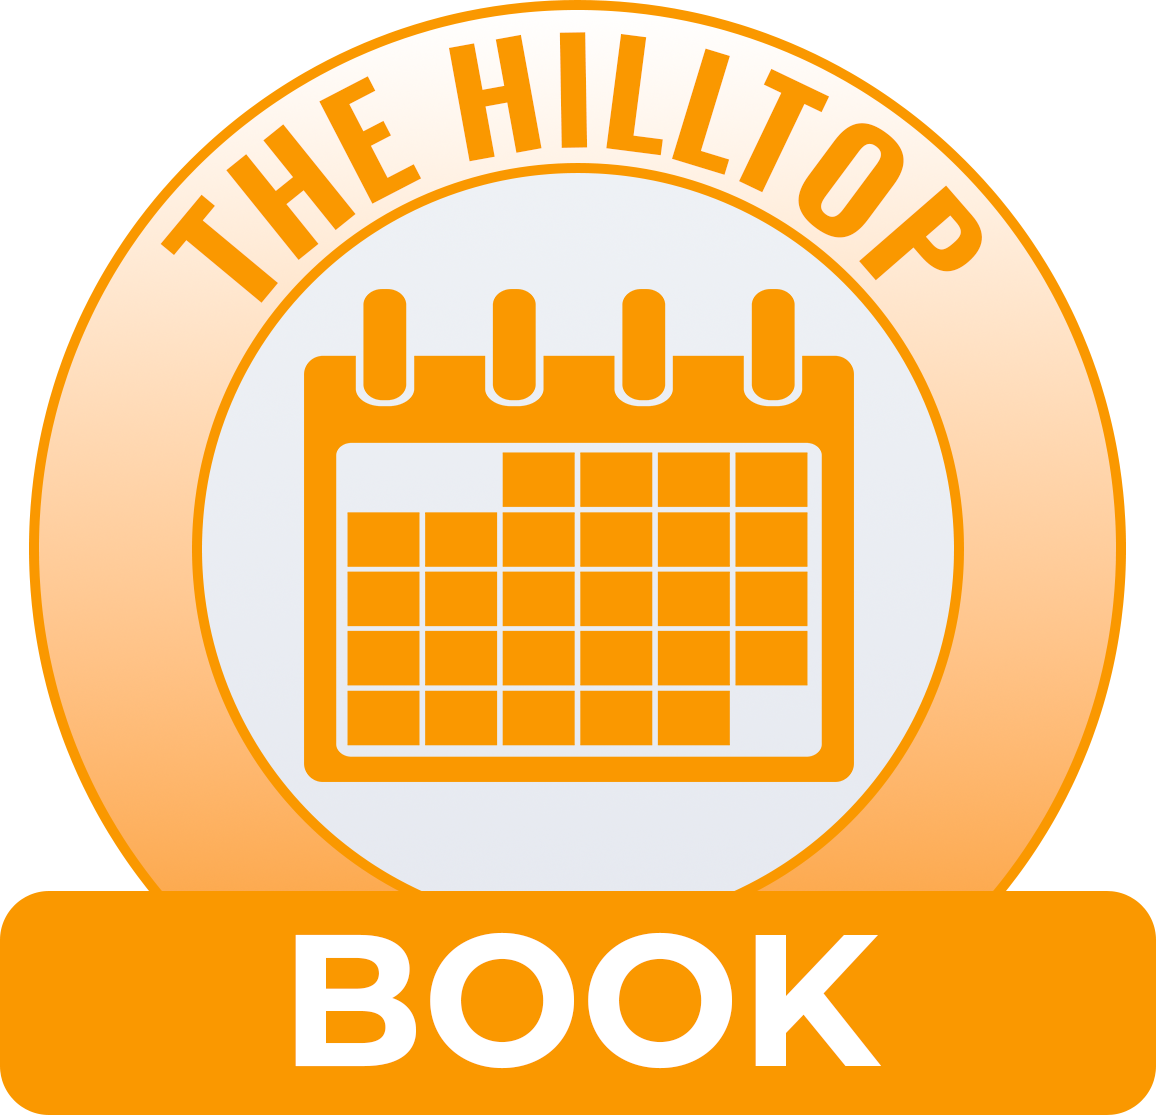 Hilltop Book